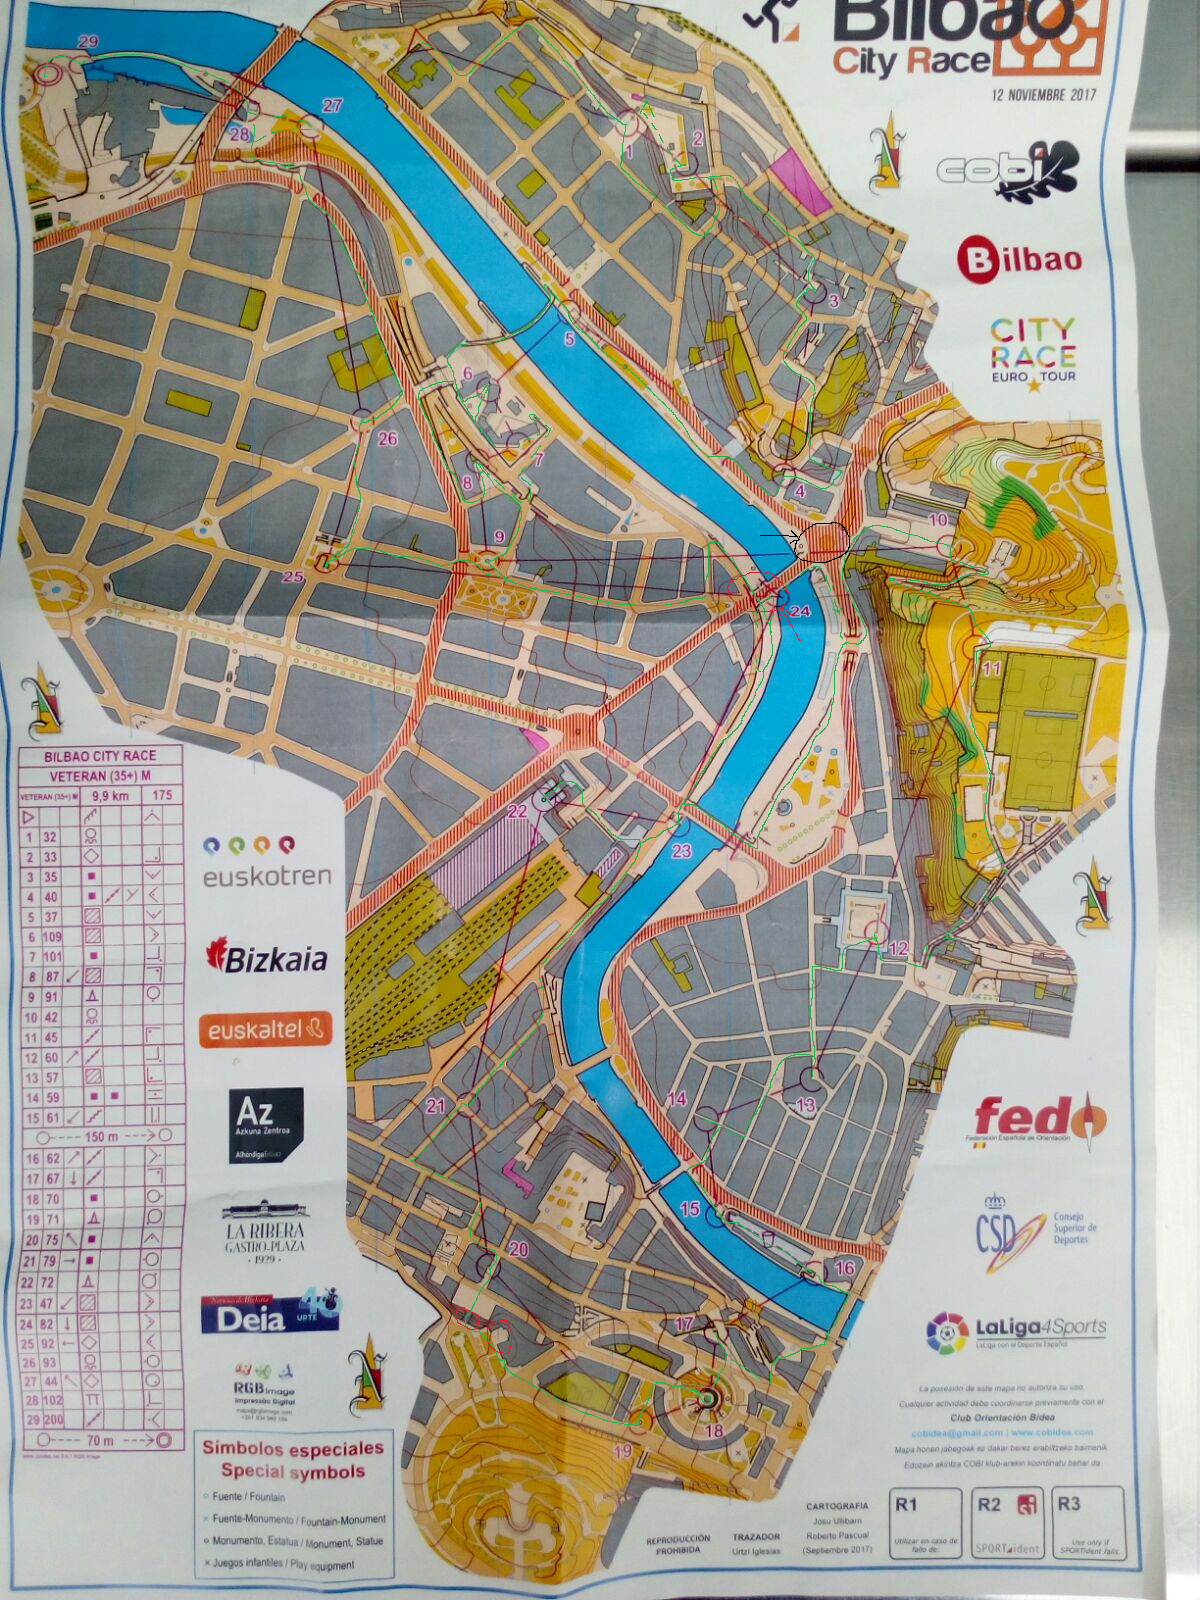 Bilbao City Race (16/11/2017)